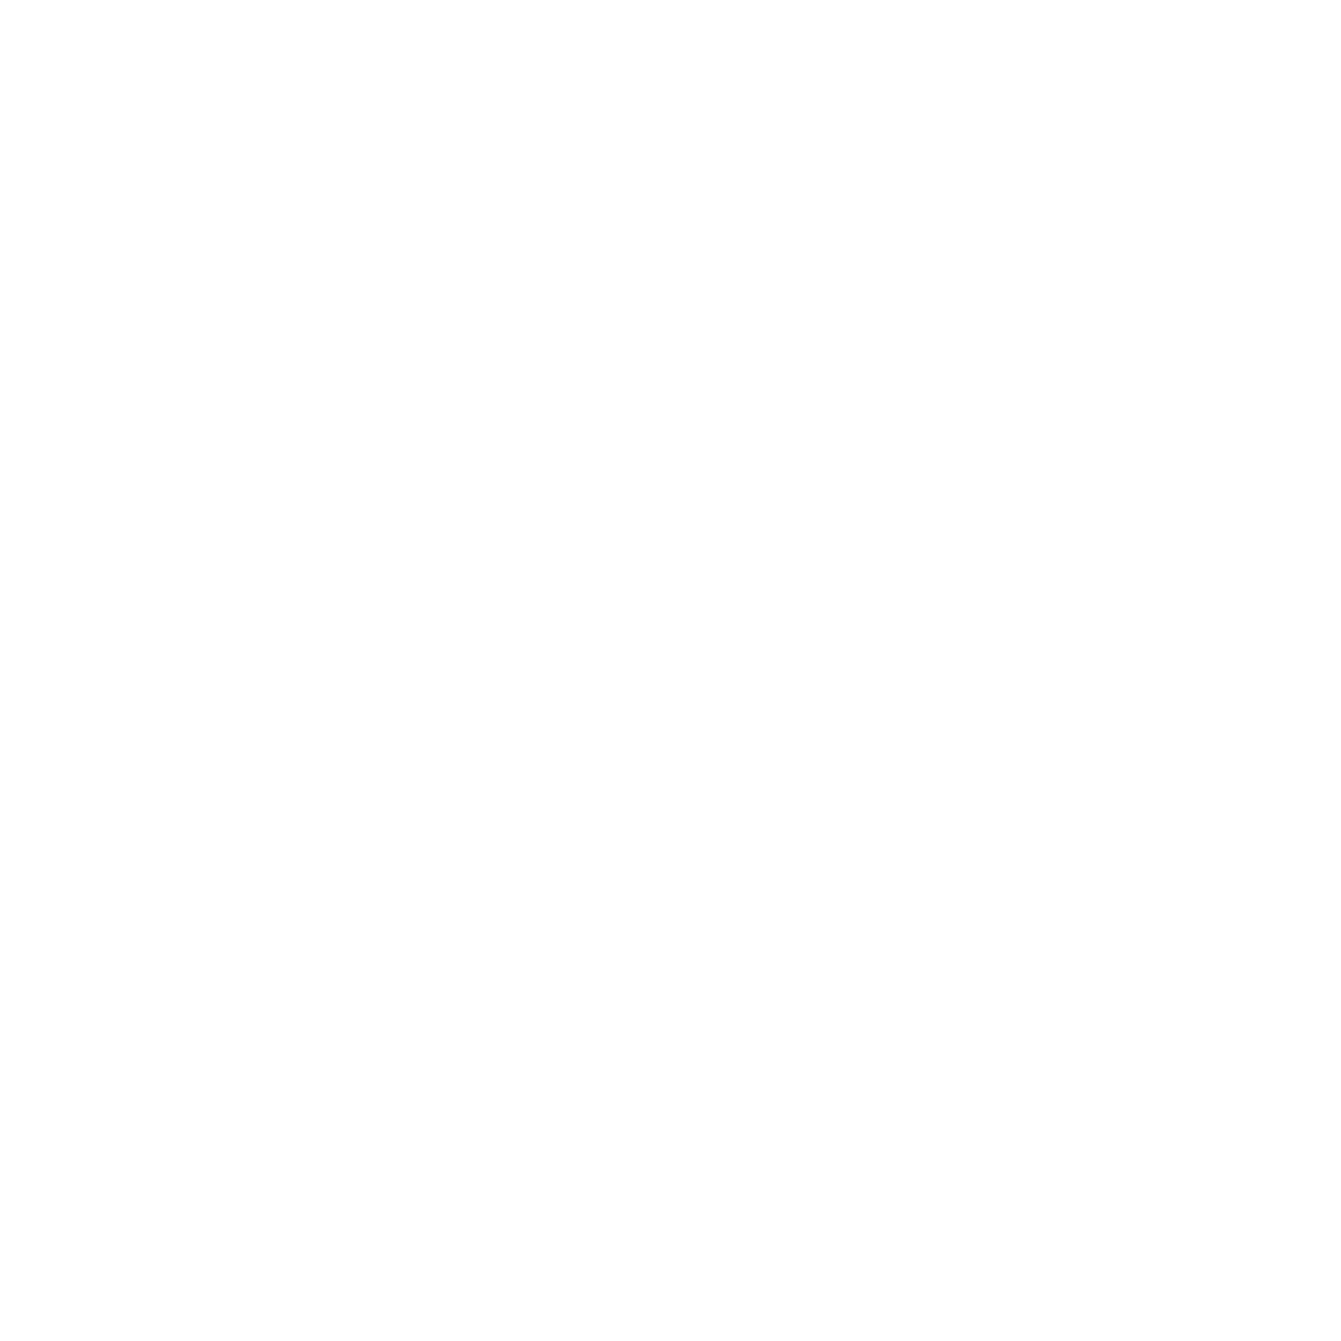 OUTshine LGBTQ+ Film Festival laurel